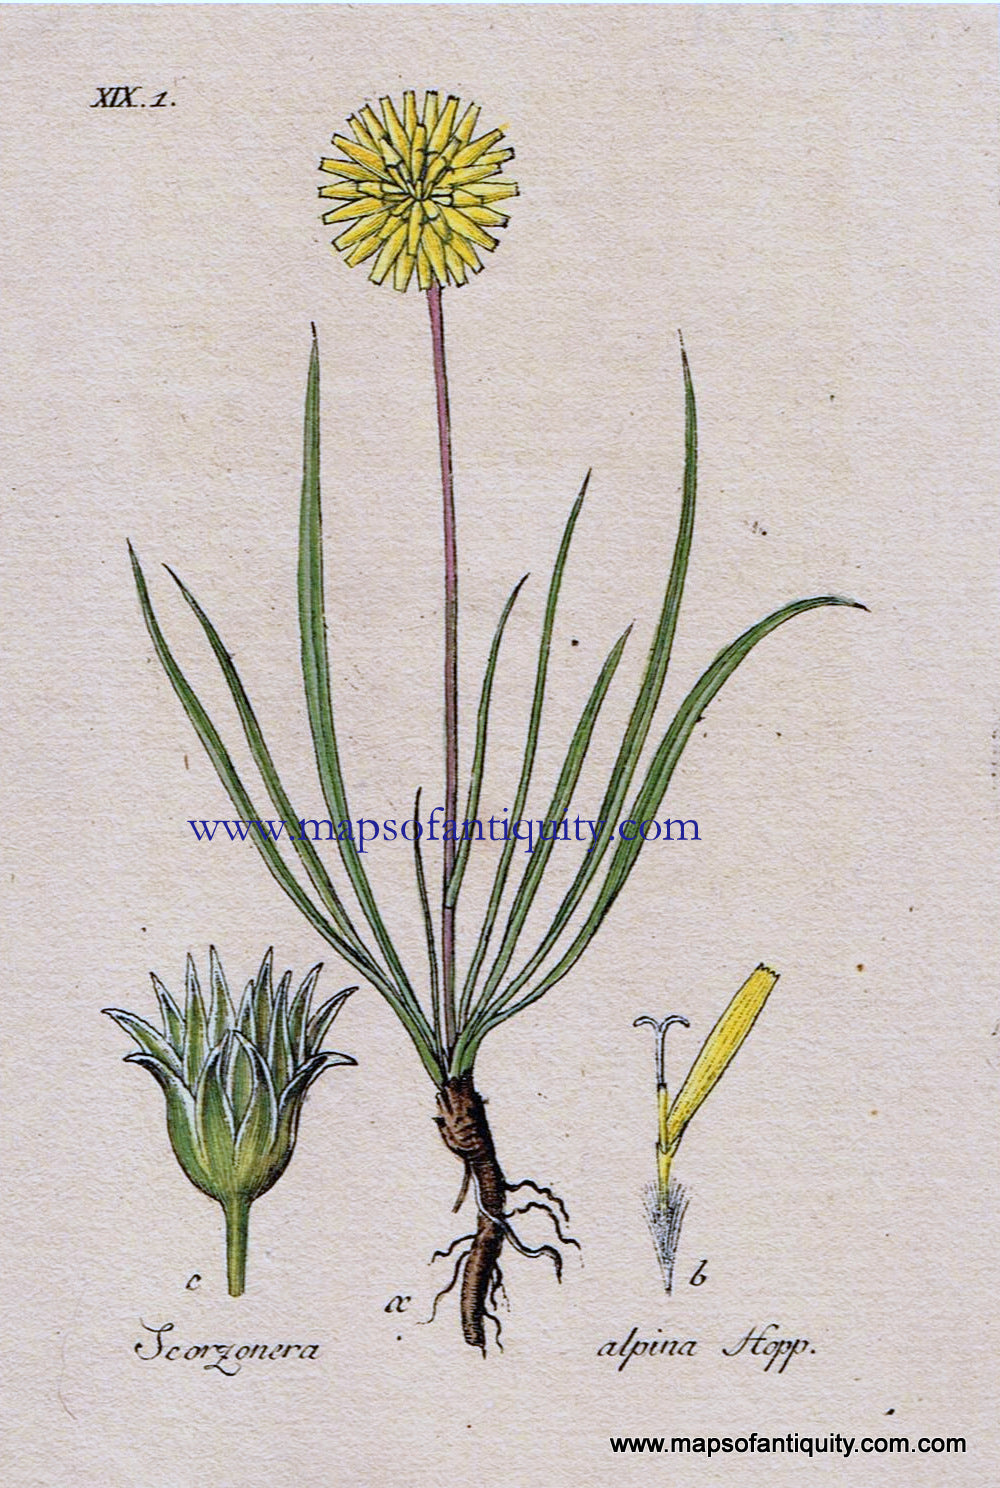 Antique-Hand-Colored-Botanical-Print-Scorzonera-alpina-Hopp.-Or-alpine-dandelion-Botanical-Illustration-Antique-Prints--Natural-History-Botanical-1828-Jacob-Sturm-Maps-Of-Antiquity